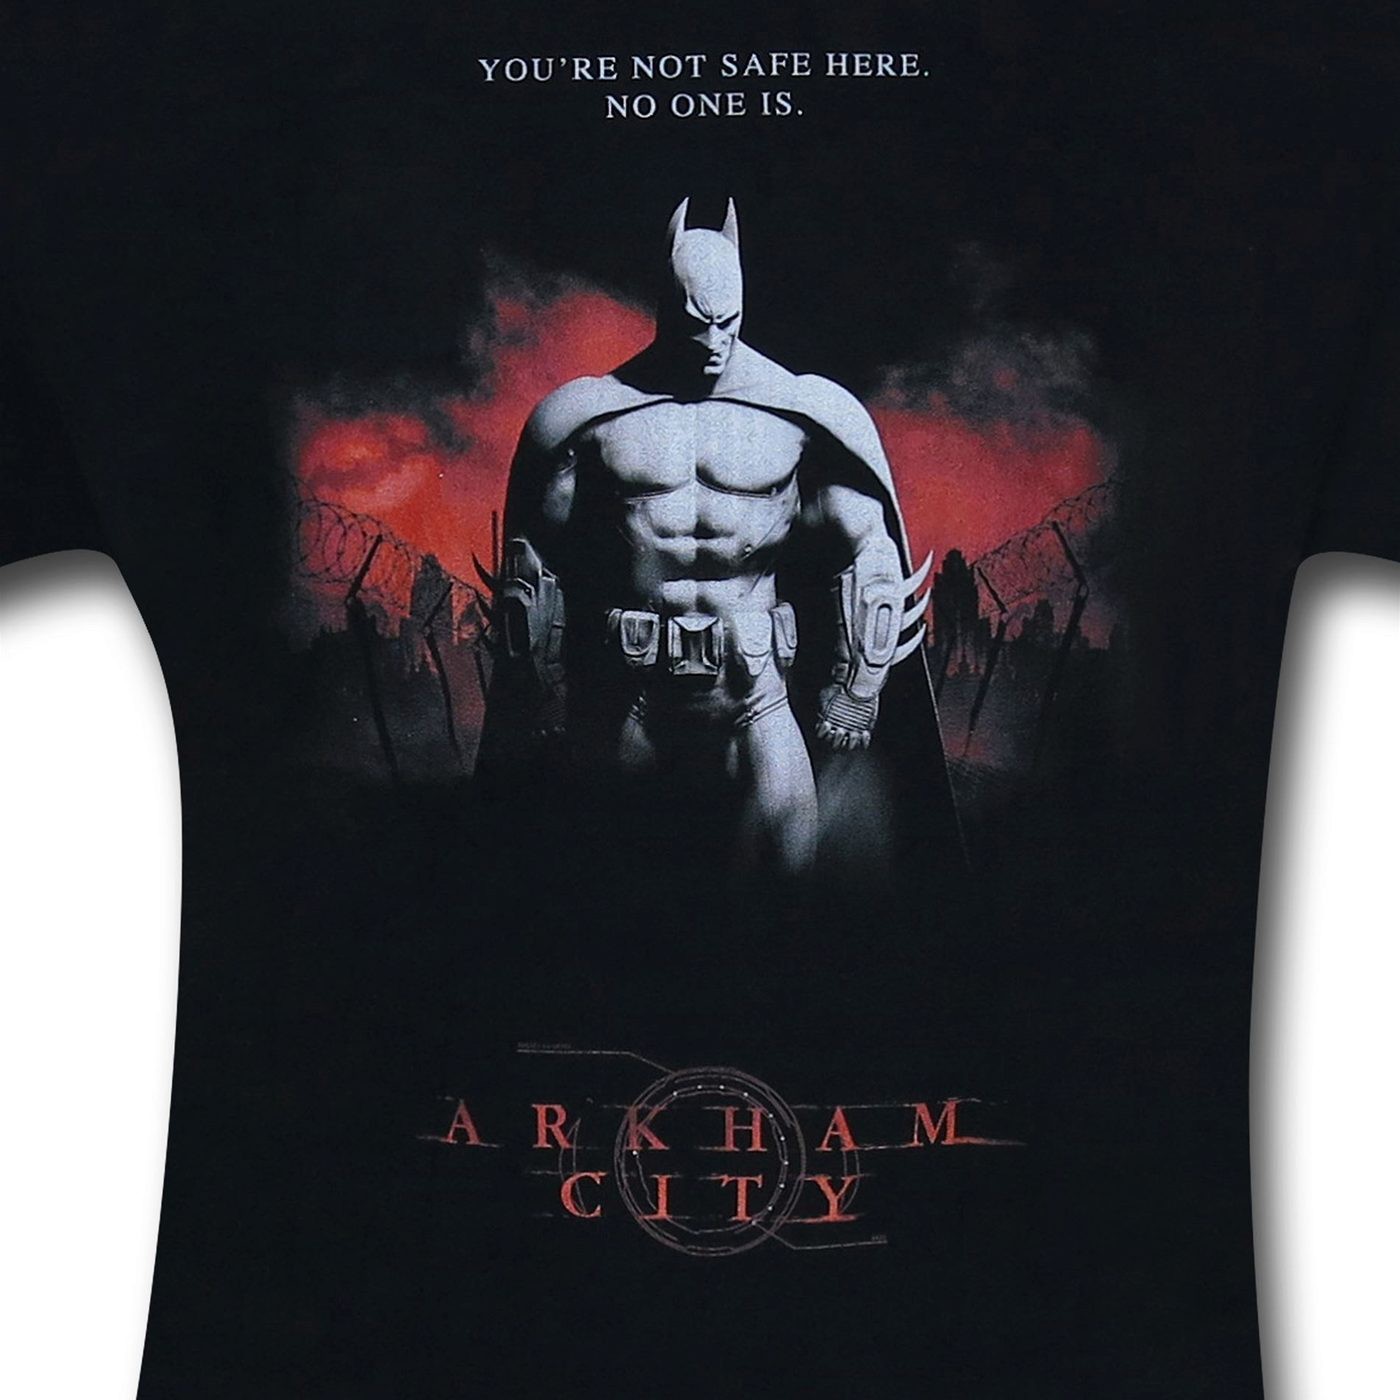 Batman Arkham City No Safety T-Shirt